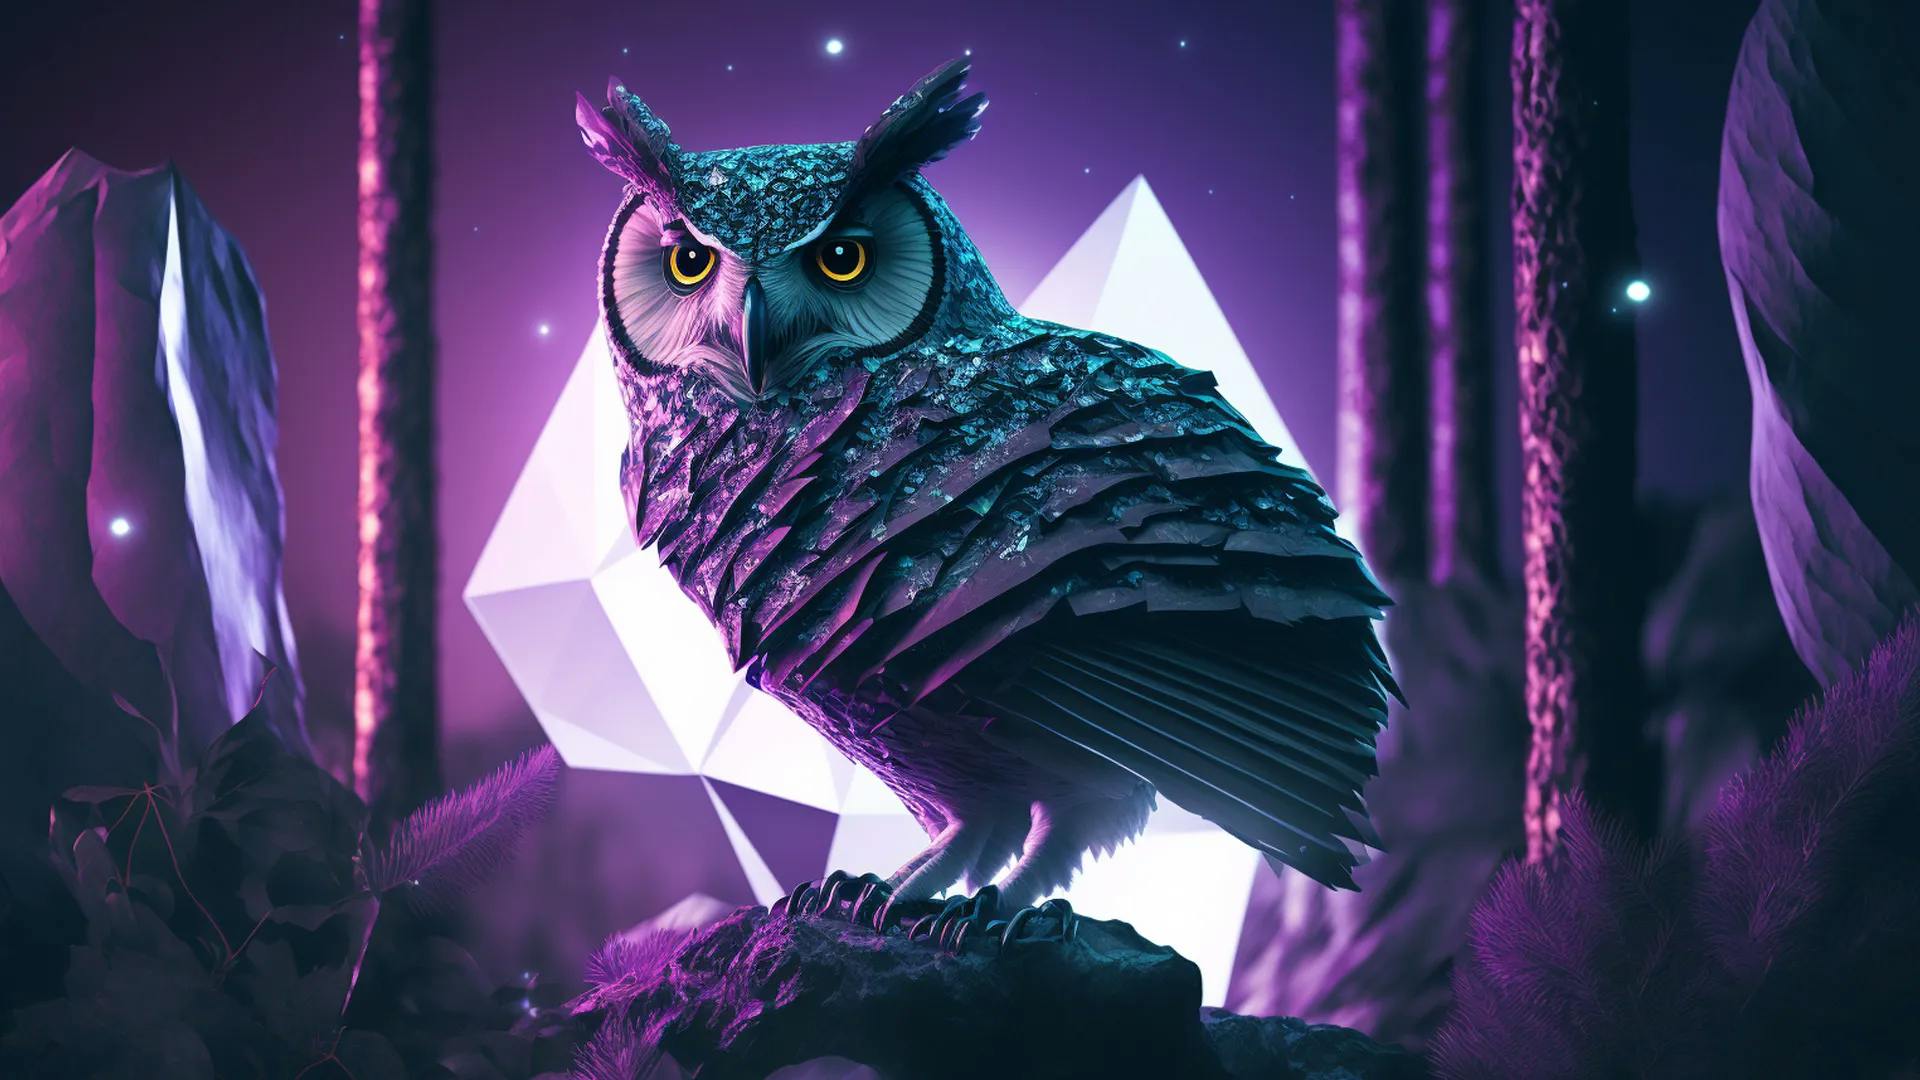 Sorcery owl image